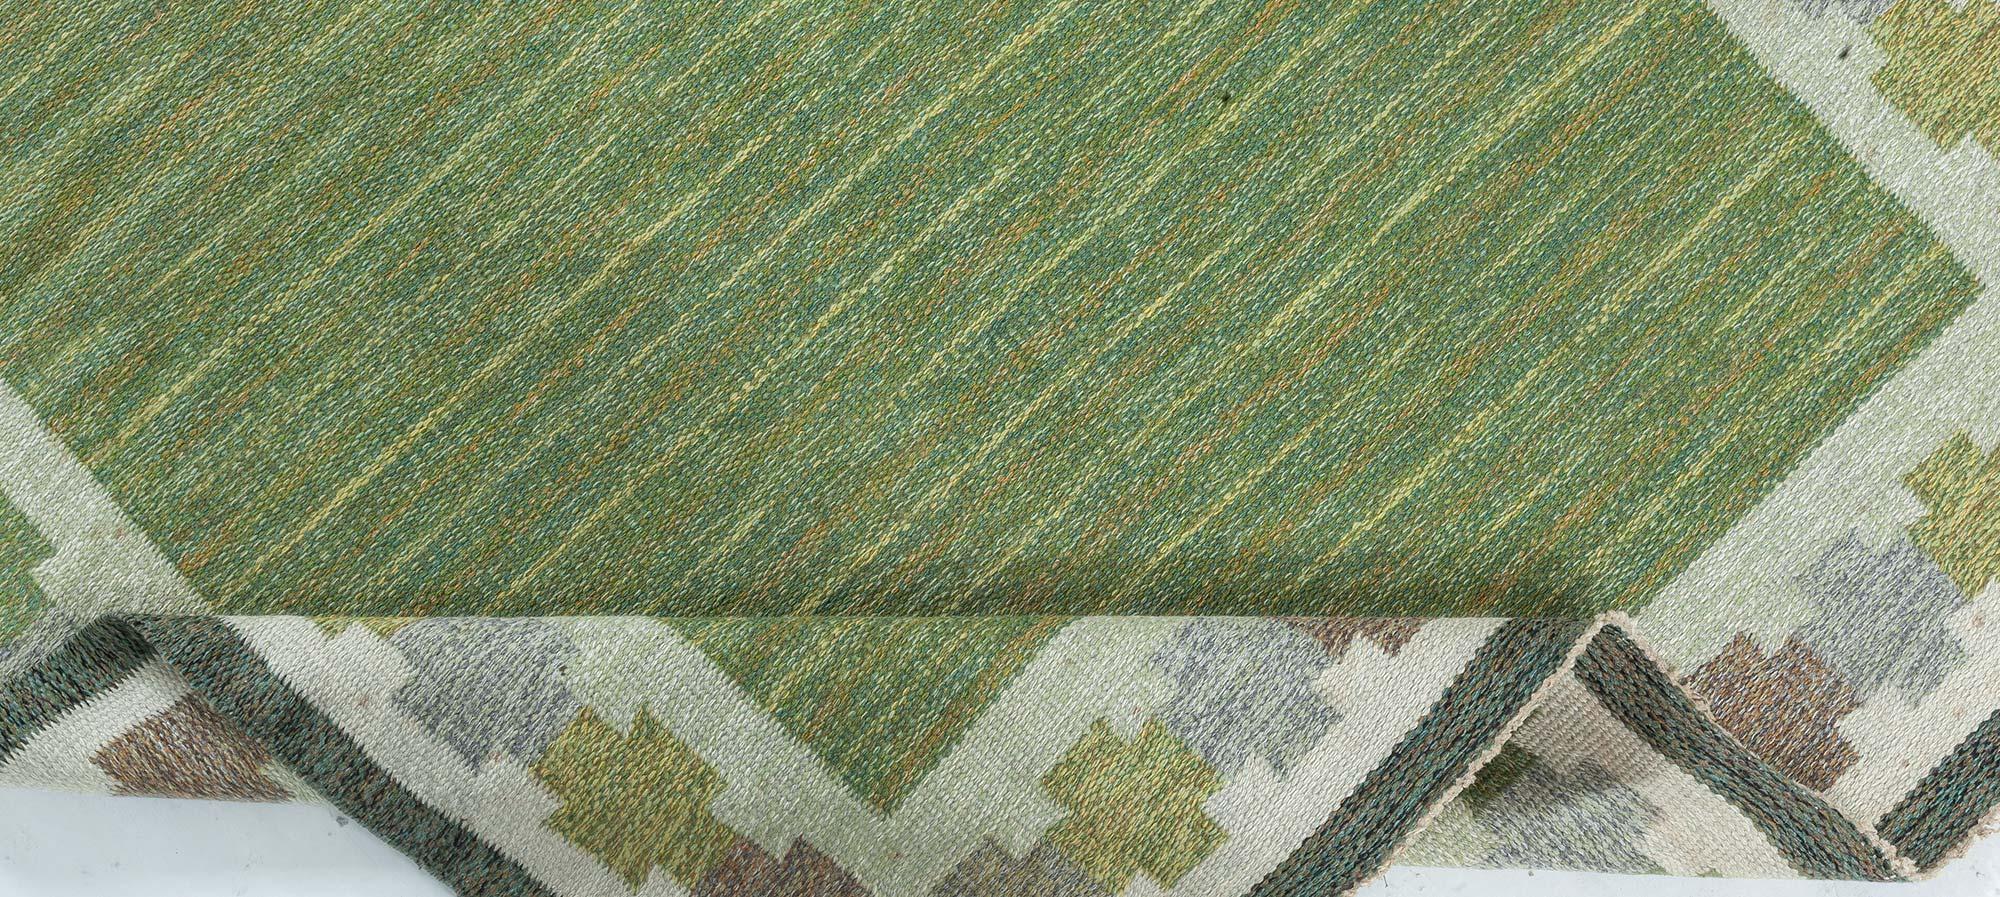 Hand-Woven Midcentury Swedish Green Flat Woven Rug by Ingegerd Silow at Doris Leslie Blau